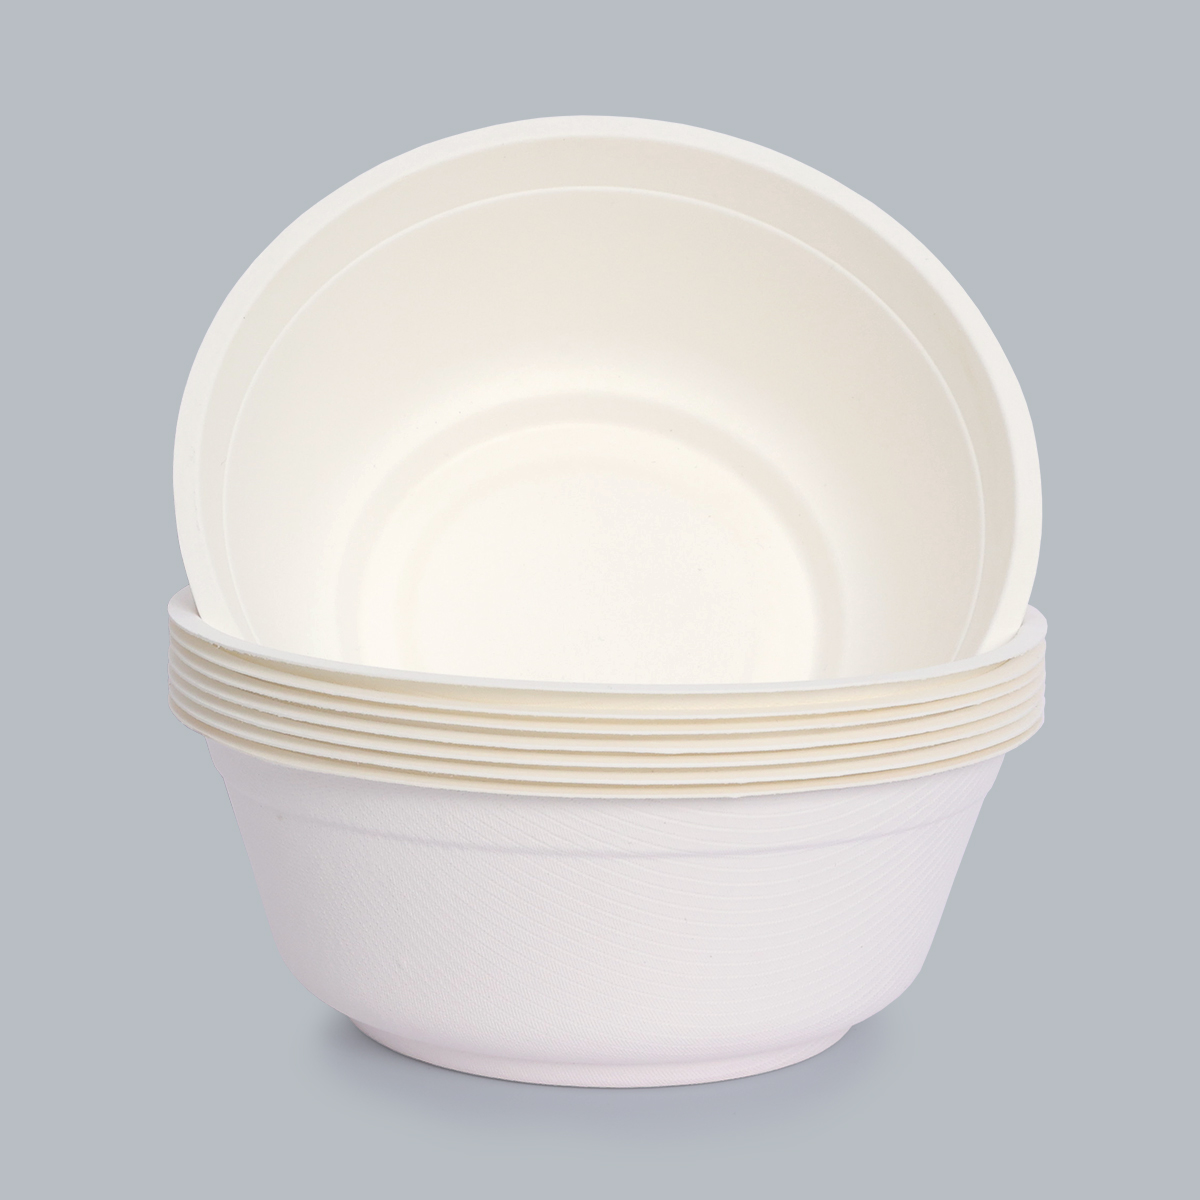 Leak-proof bowls Eco-friendly bowls Disposable environmentally friendly tableware